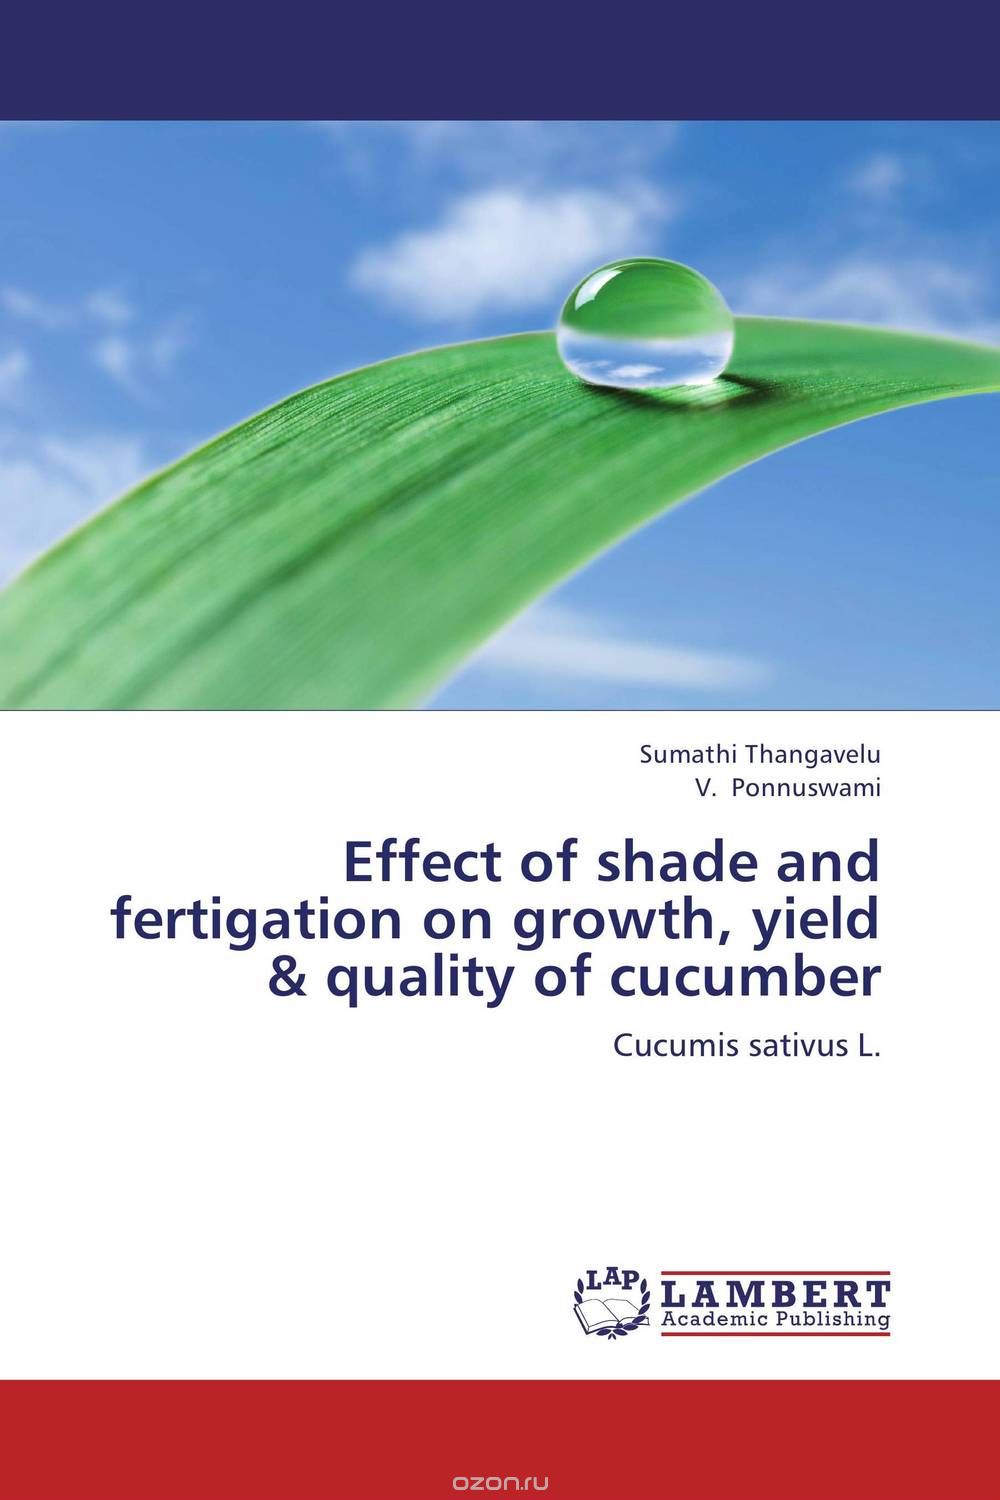 Скачать книгу "Effect of shade and fertigation on growth, yield & quality of cucumber"